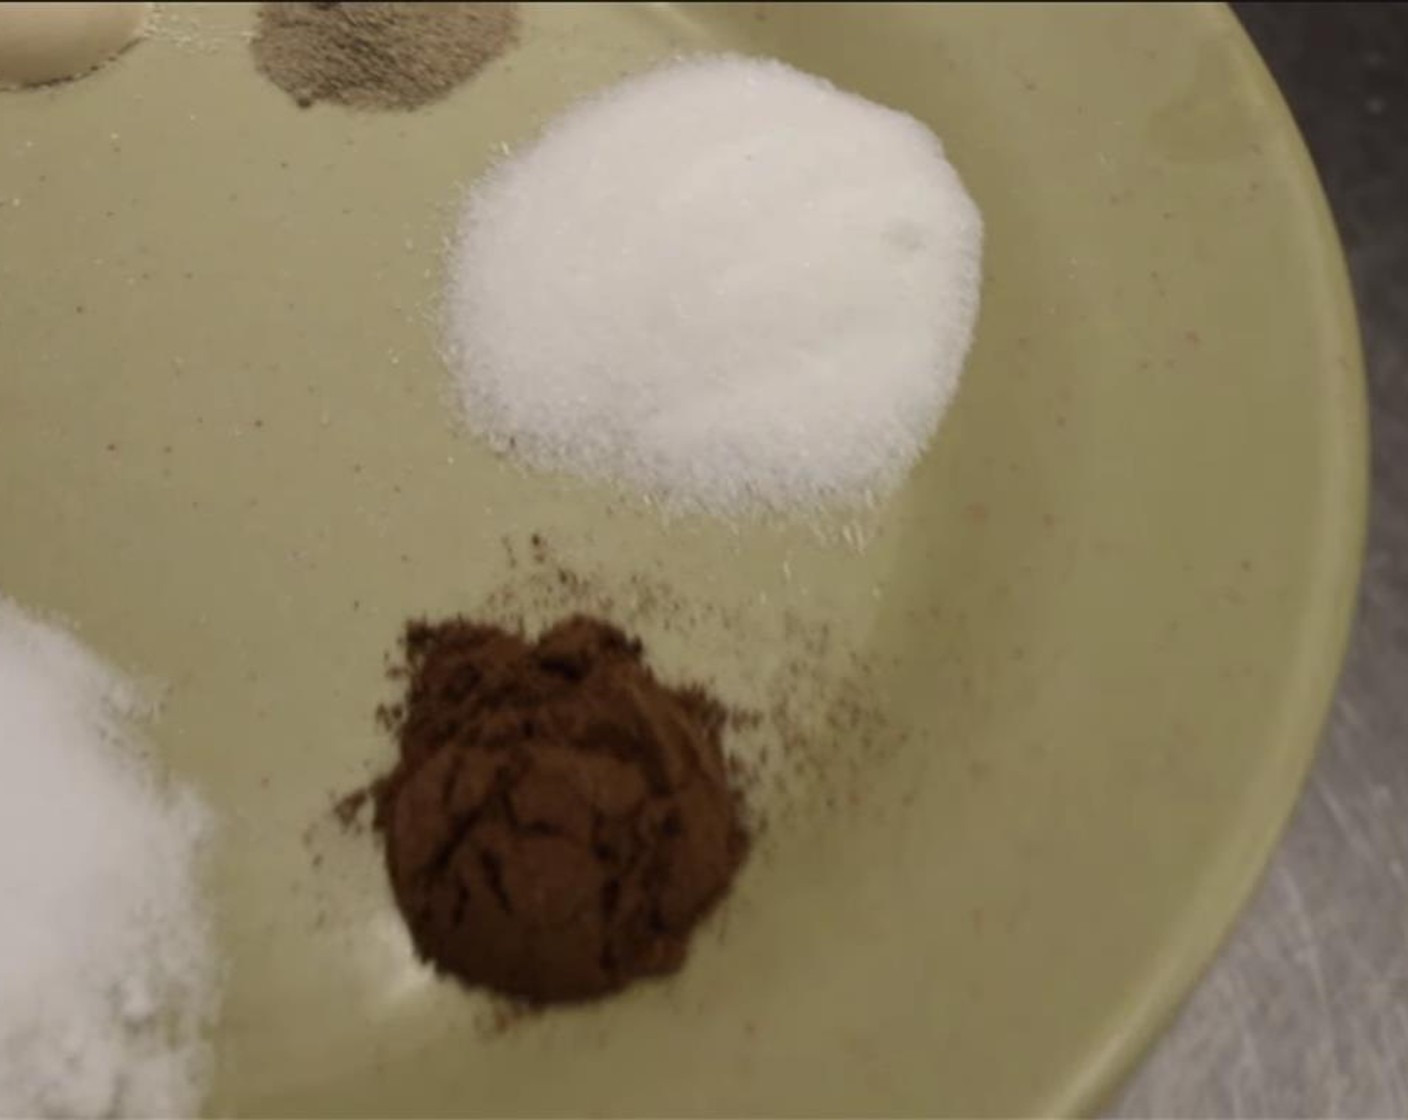 step 4 In a bowl mix the spice rub: Salt (1 Tbsp), Ground White Pepper (1/4 tsp), Ground Ginger (1/4 tsp), McCormick® Garlic Powder (1/2 tsp), Chinese Five Spice Powder (1/2 Tbsp), and Granulated Sugar (1/2 Tbsp).